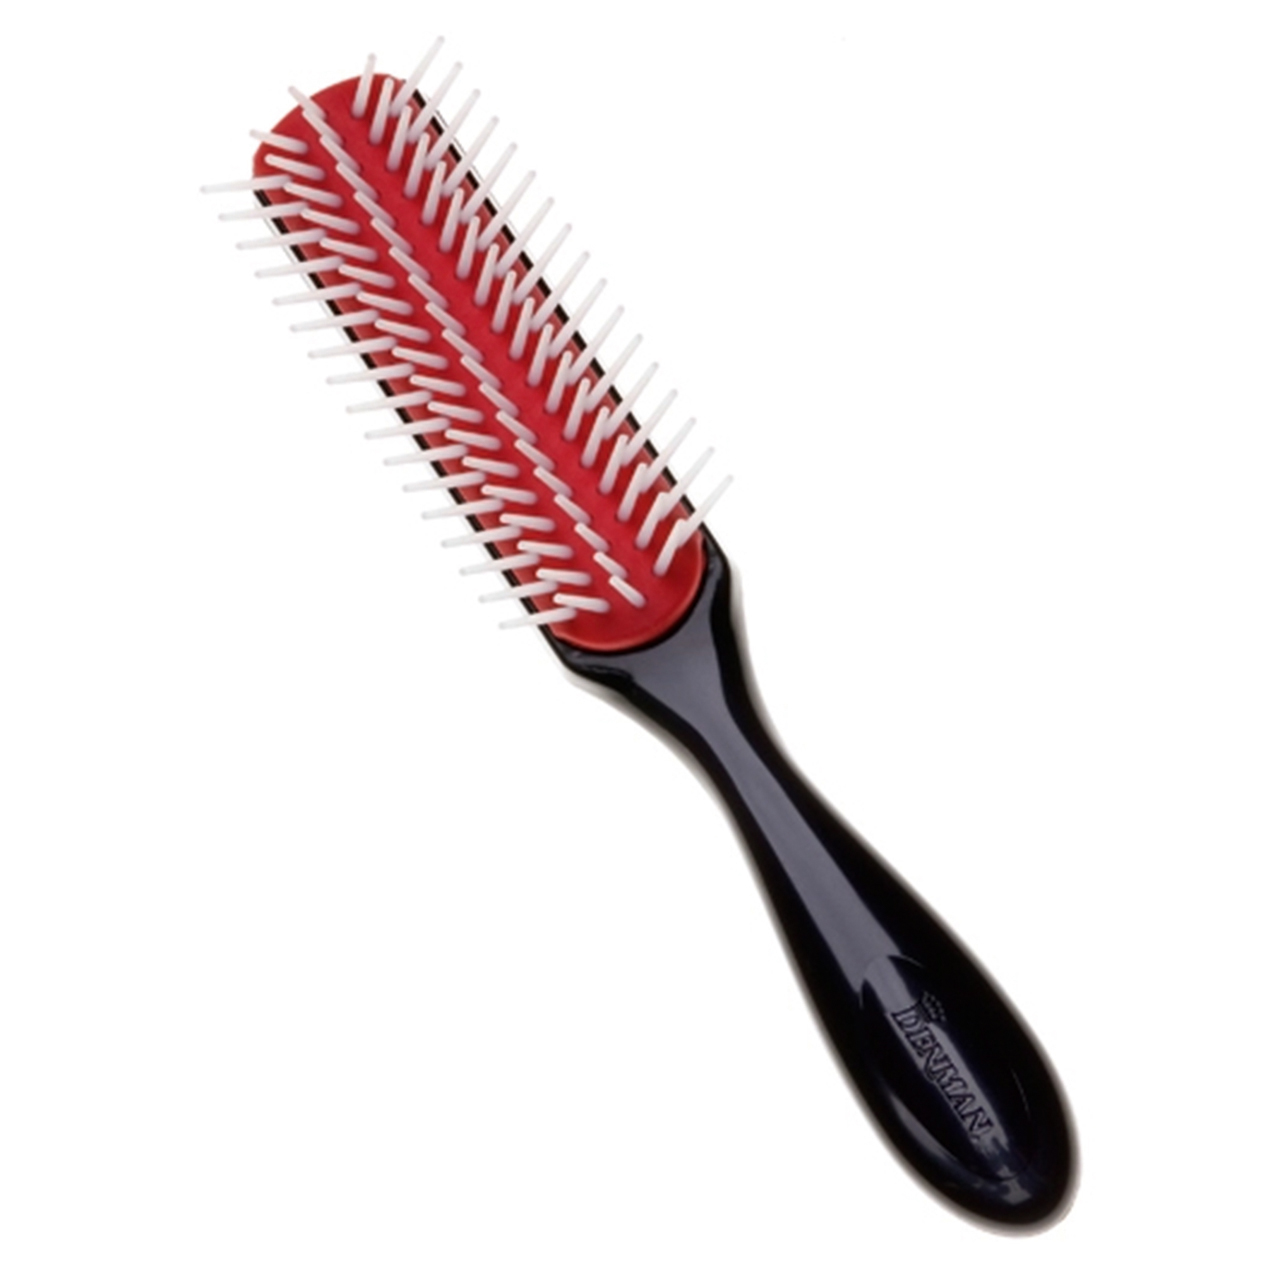 Definitive Hair Styling Brush